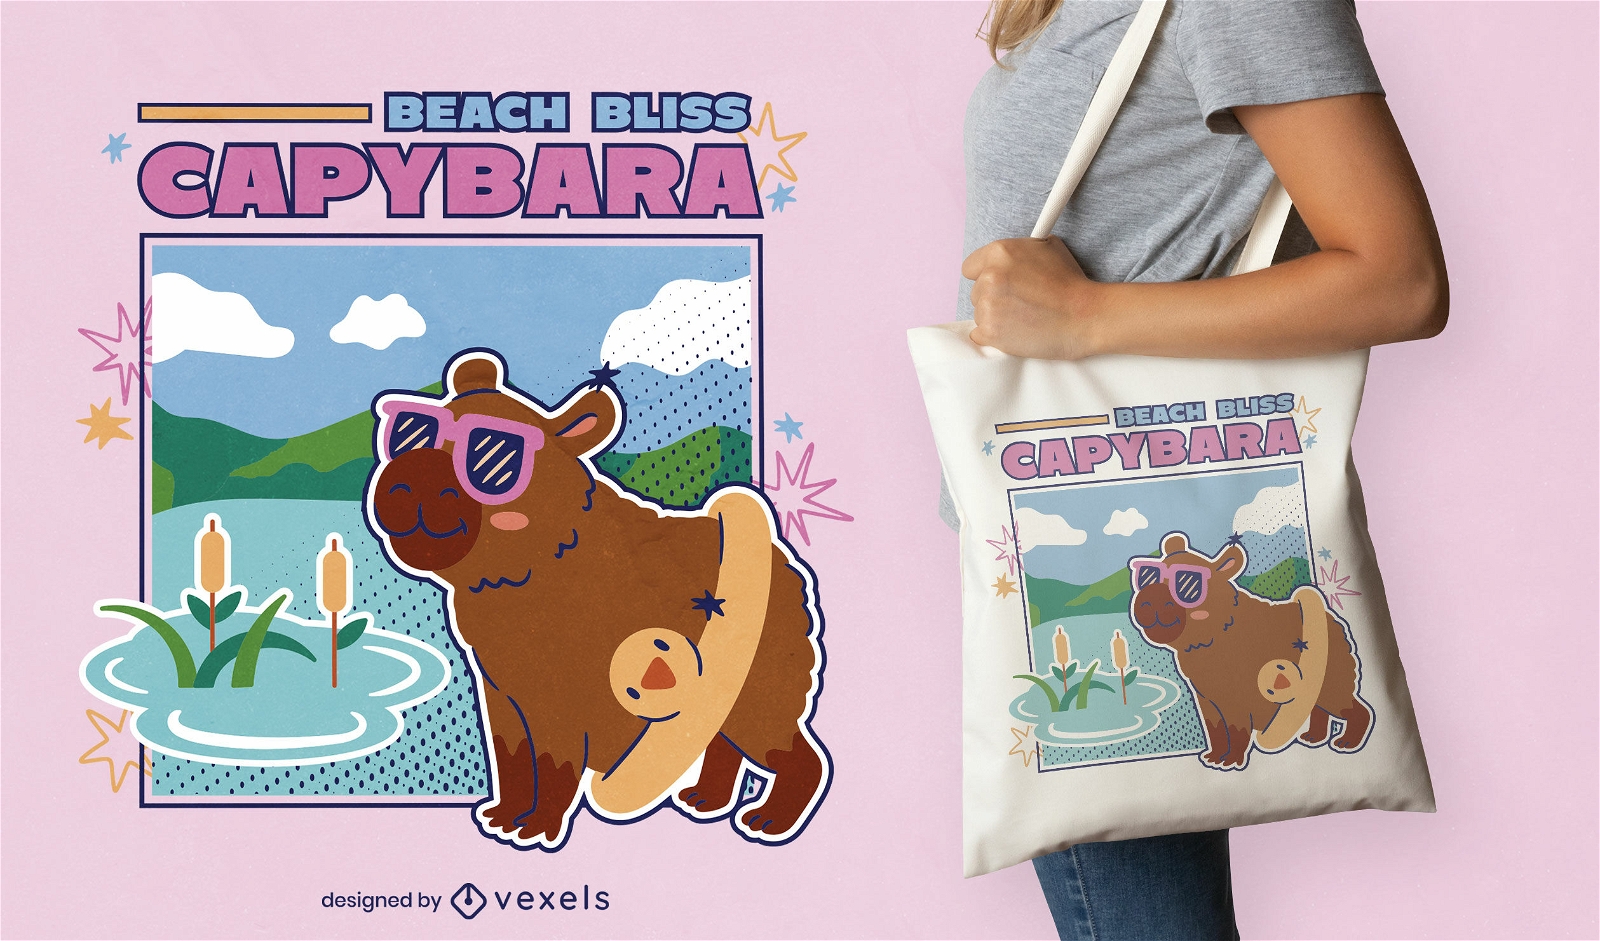 Beach bliss capybara tote bag design